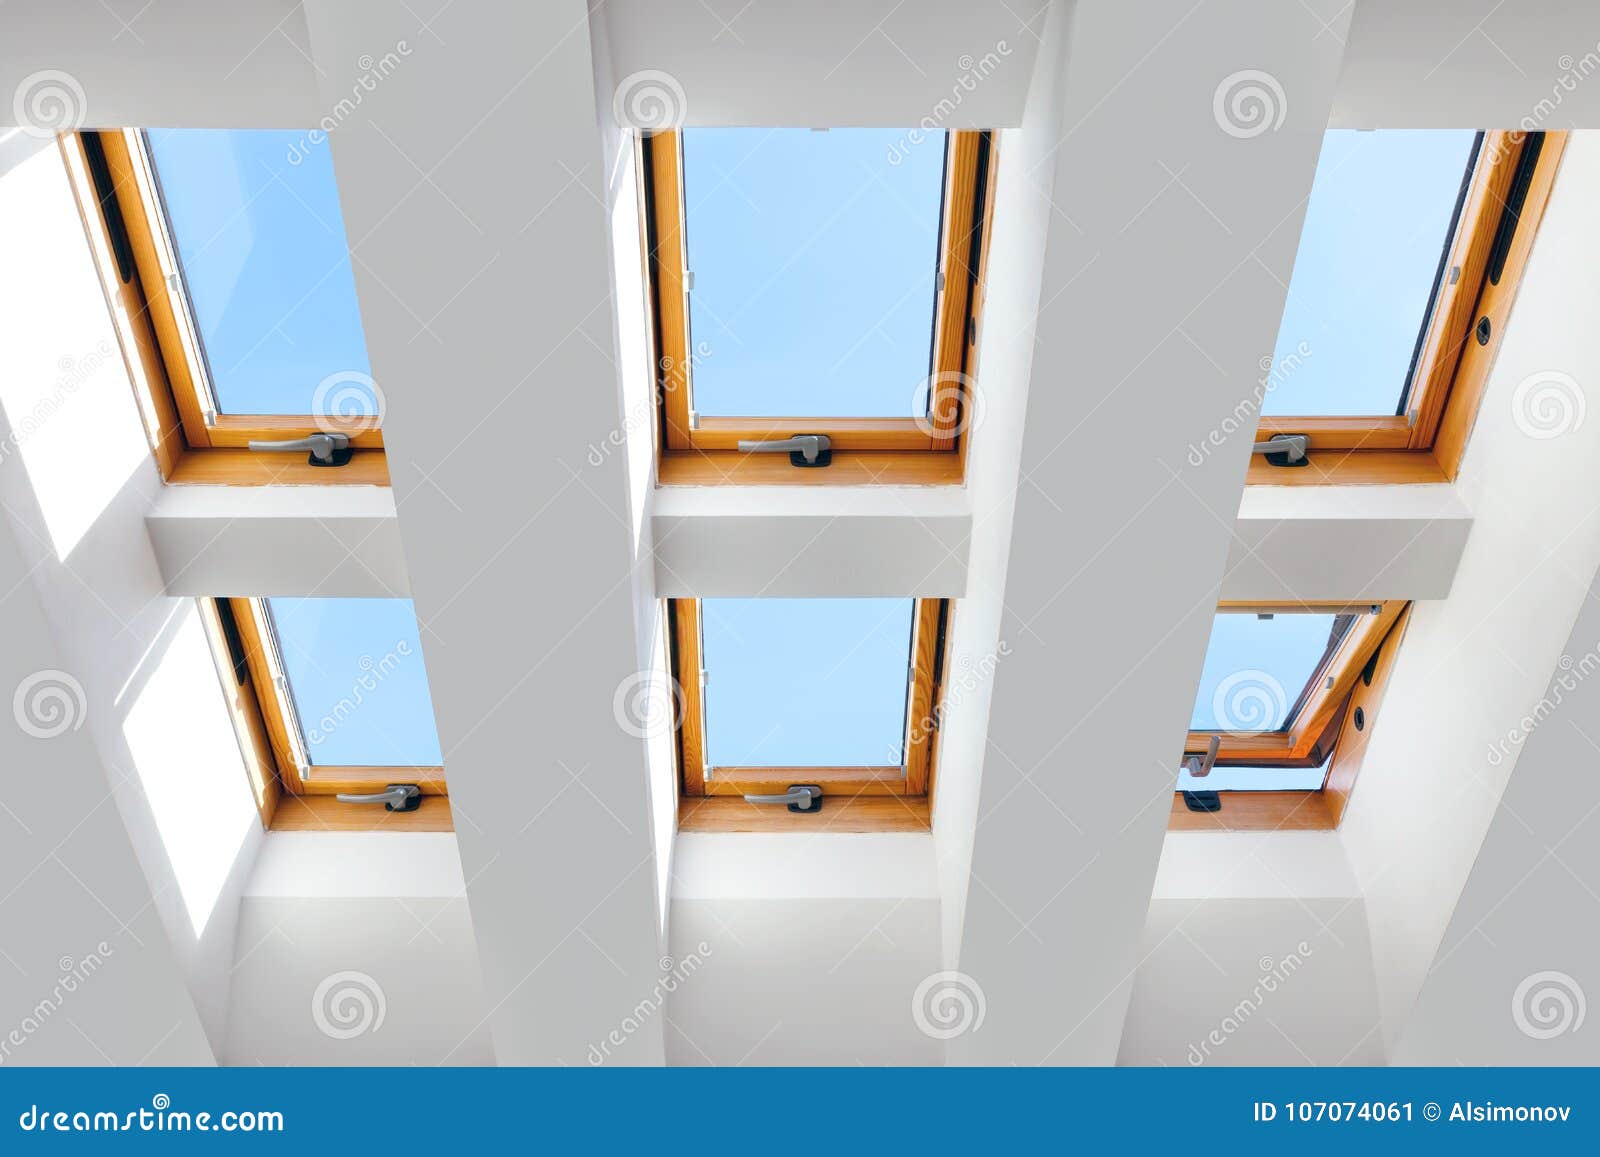 the  of the six skylights windows